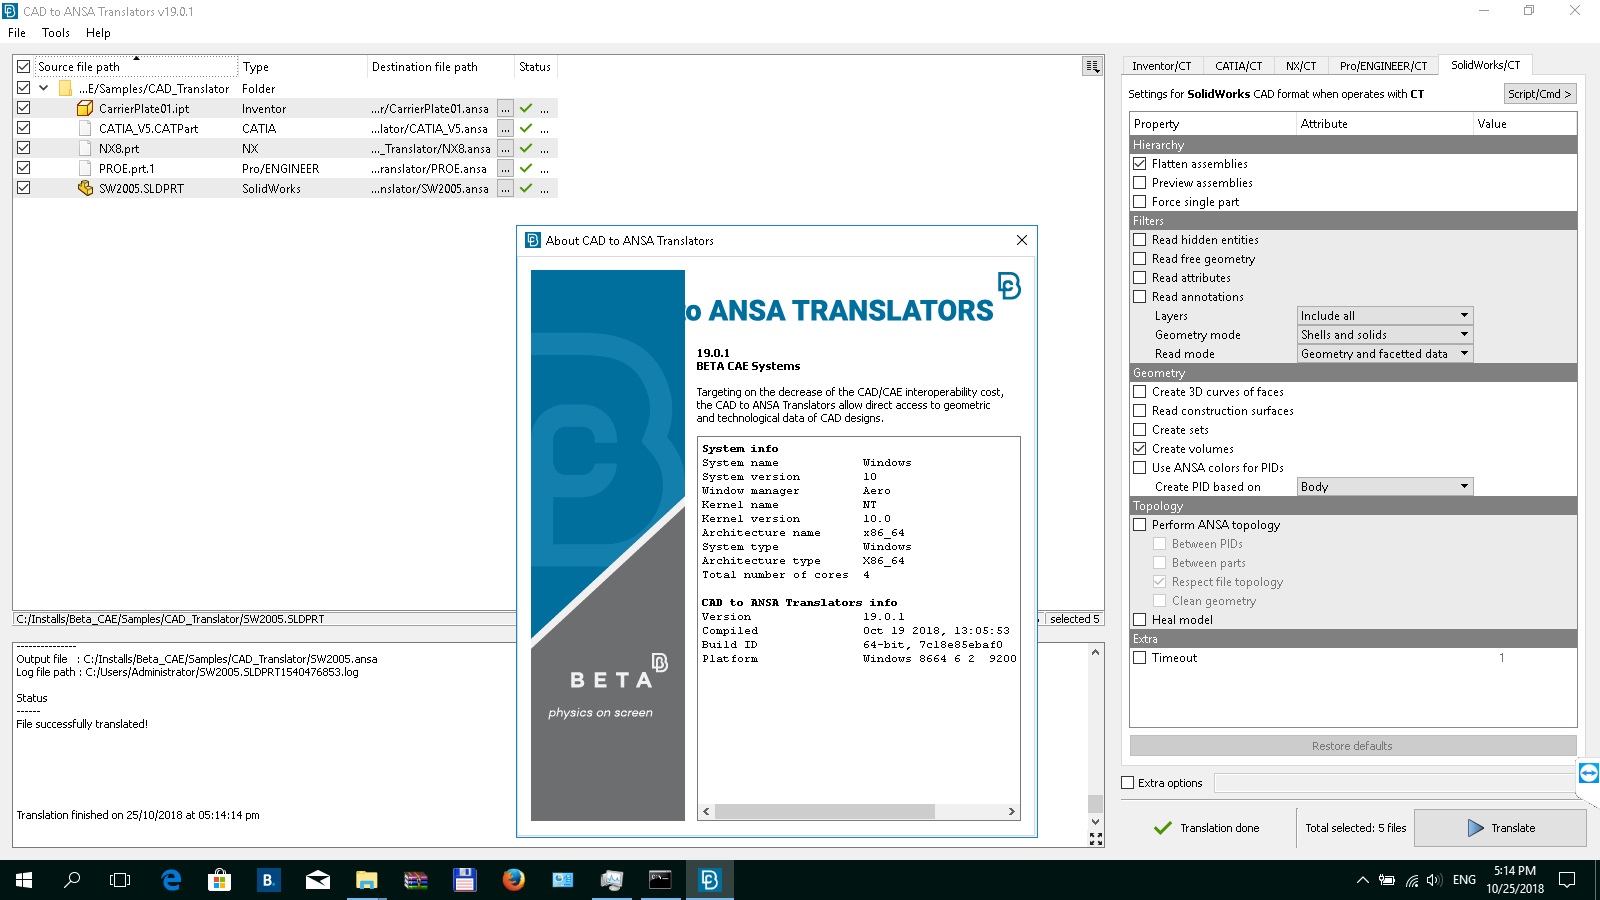 Working with BETA-CAE Systems v19.0.1 - ANSA TRANSLATORS